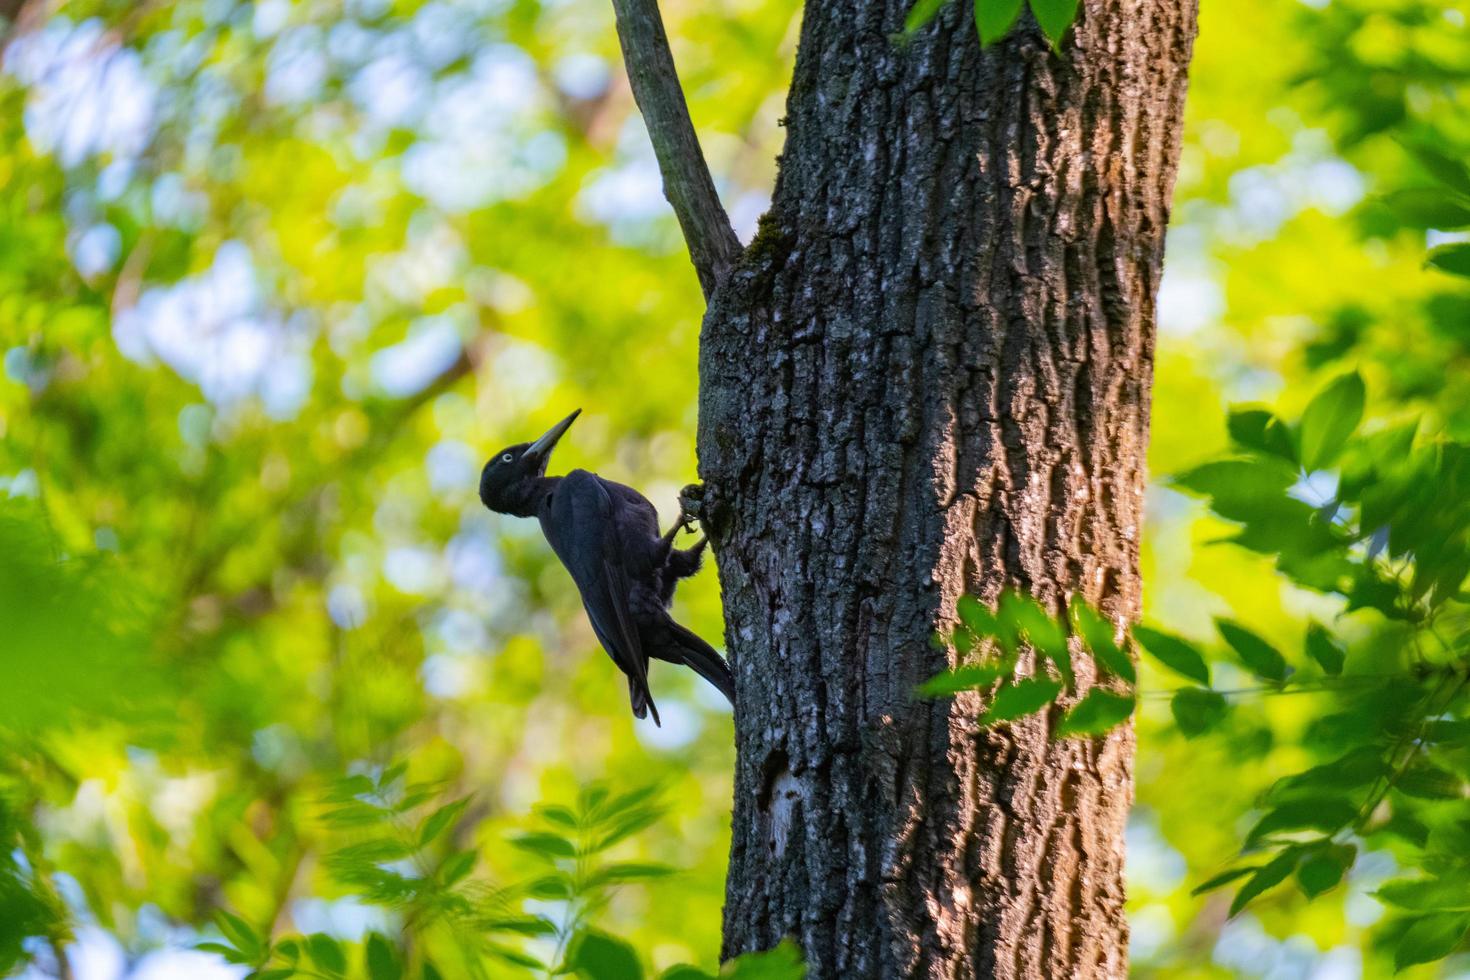 The black woodpecker or Dryocopus martius on the tree photo